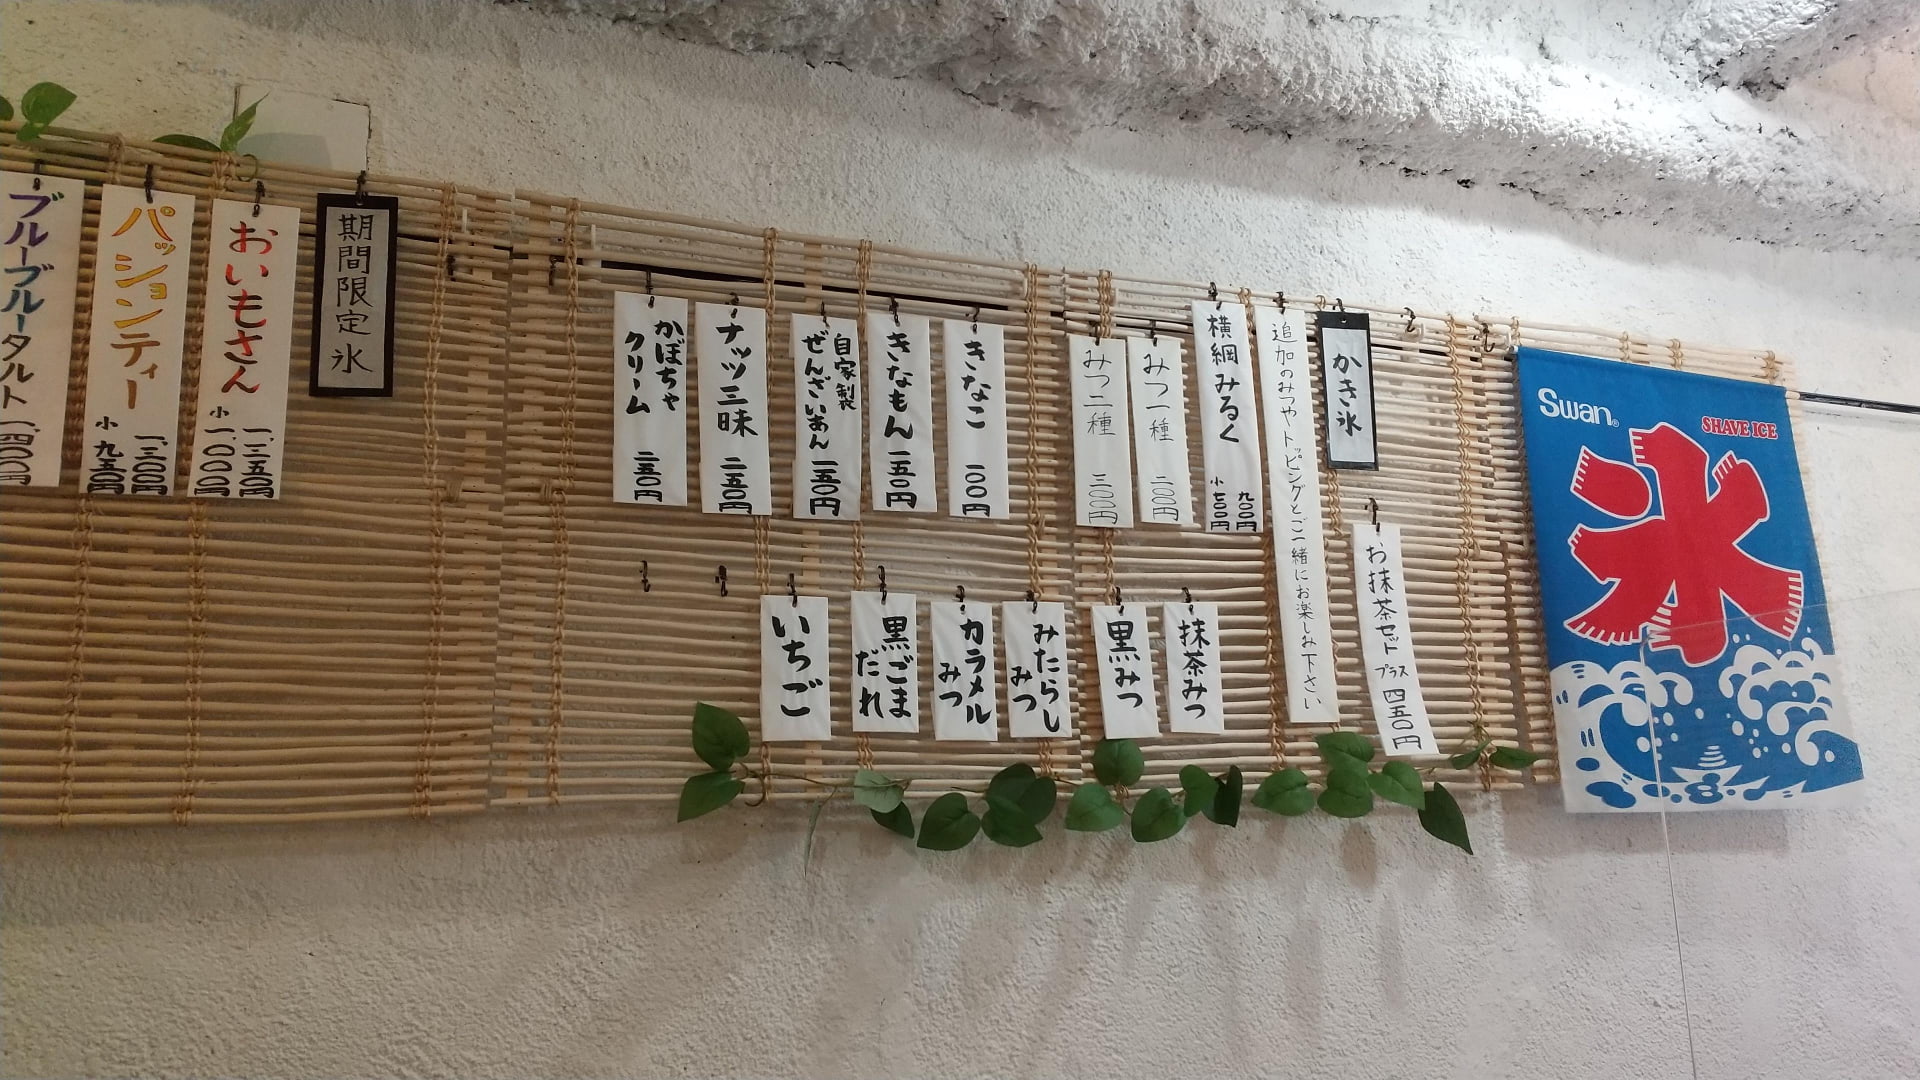 kohiruan menu on wall